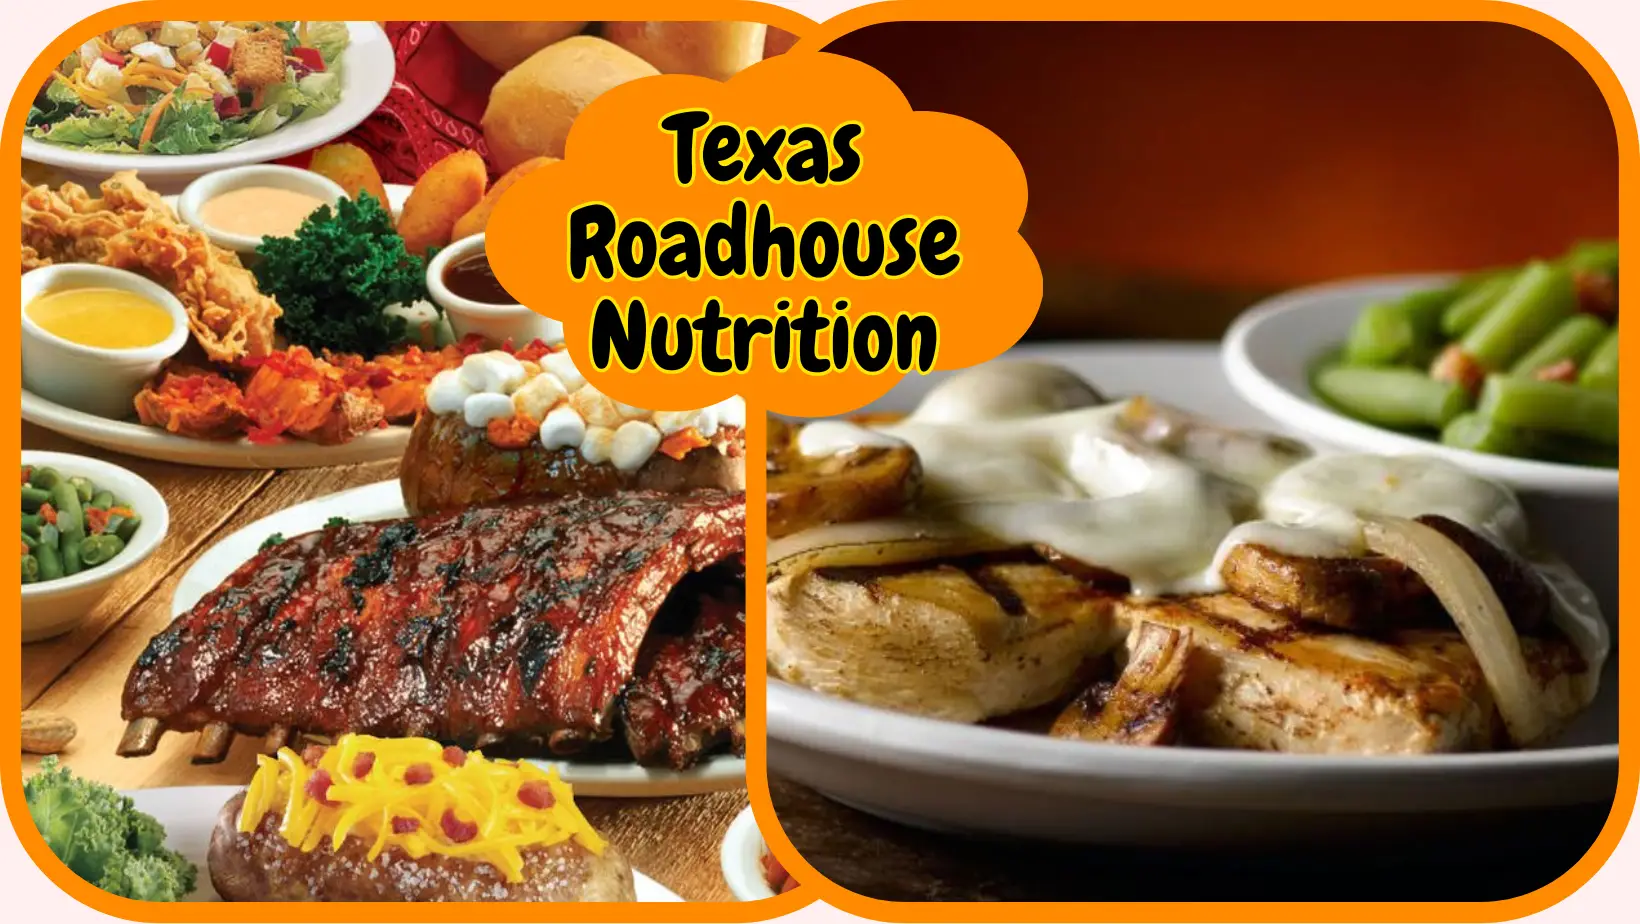 Texas Roadhouse Nutrtition